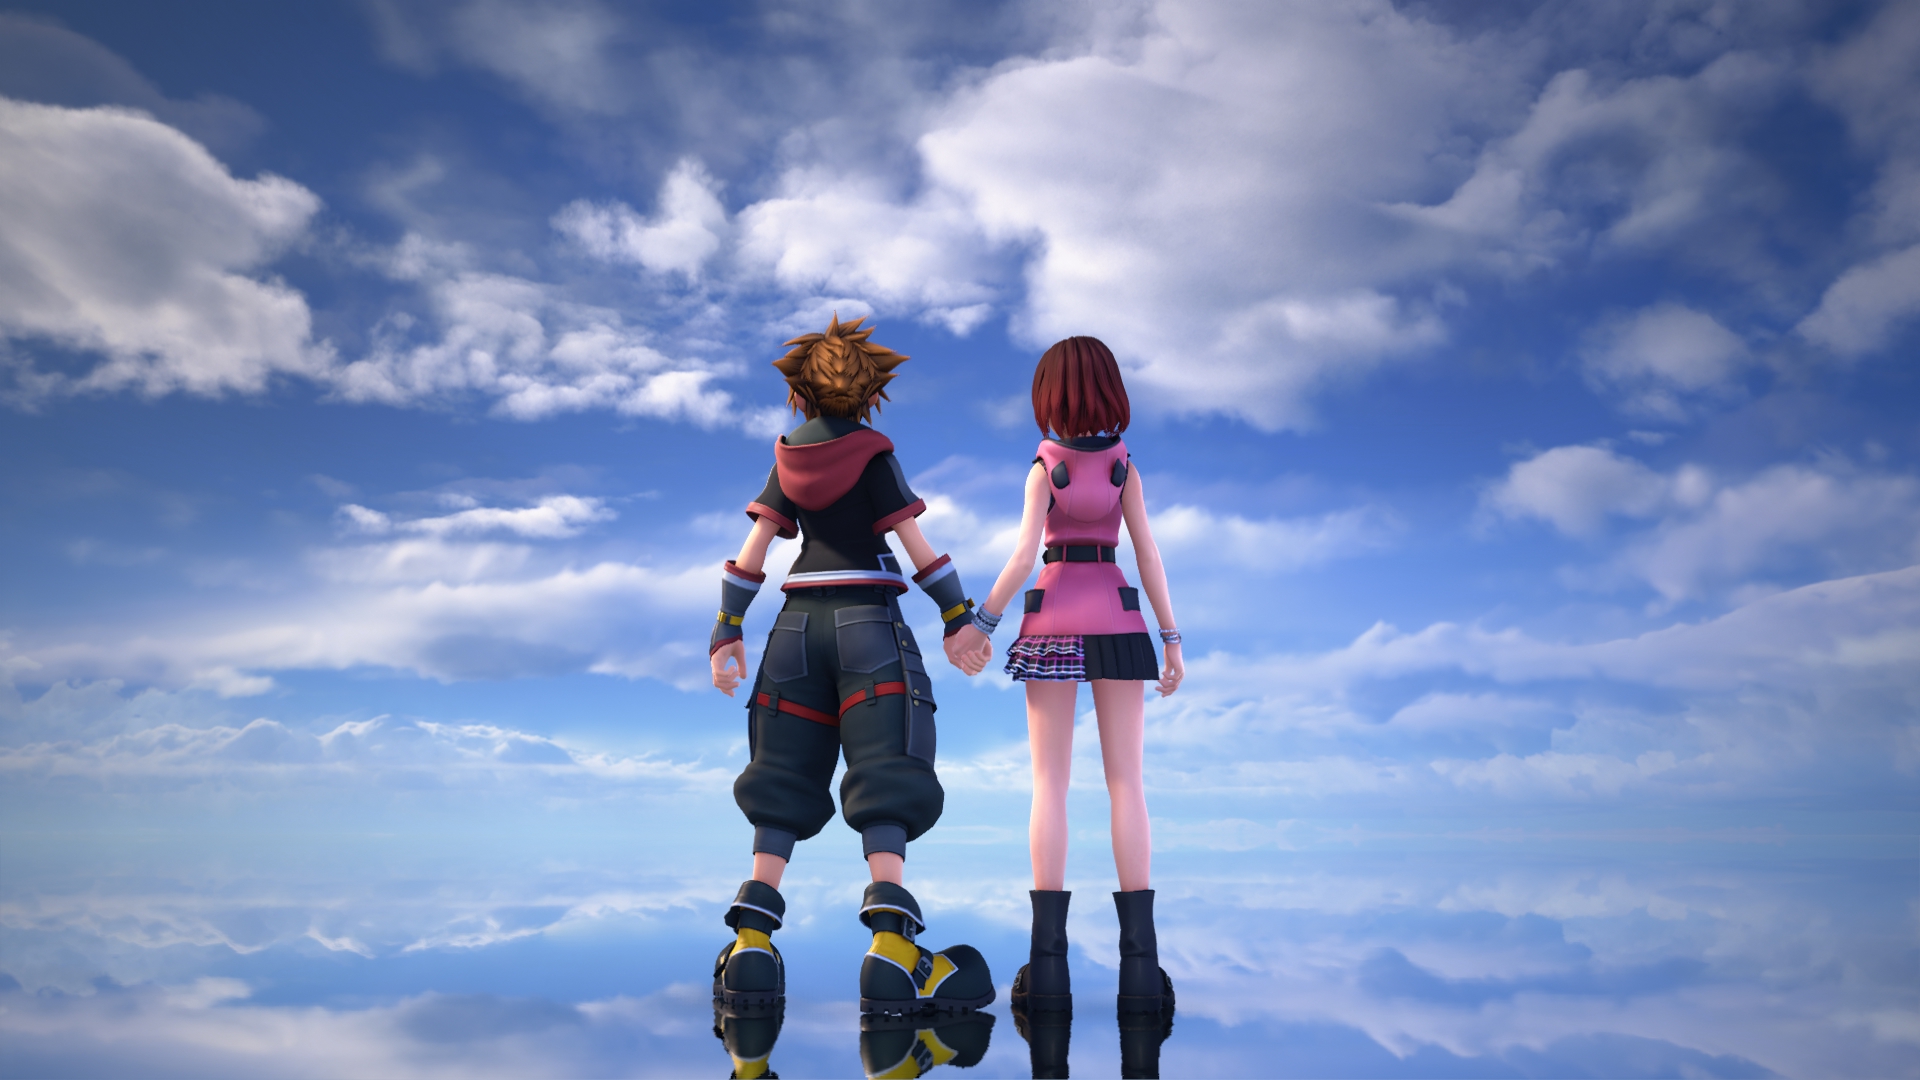 Kingdom Hearts III: Re Mind Launching 23 January 2020 17